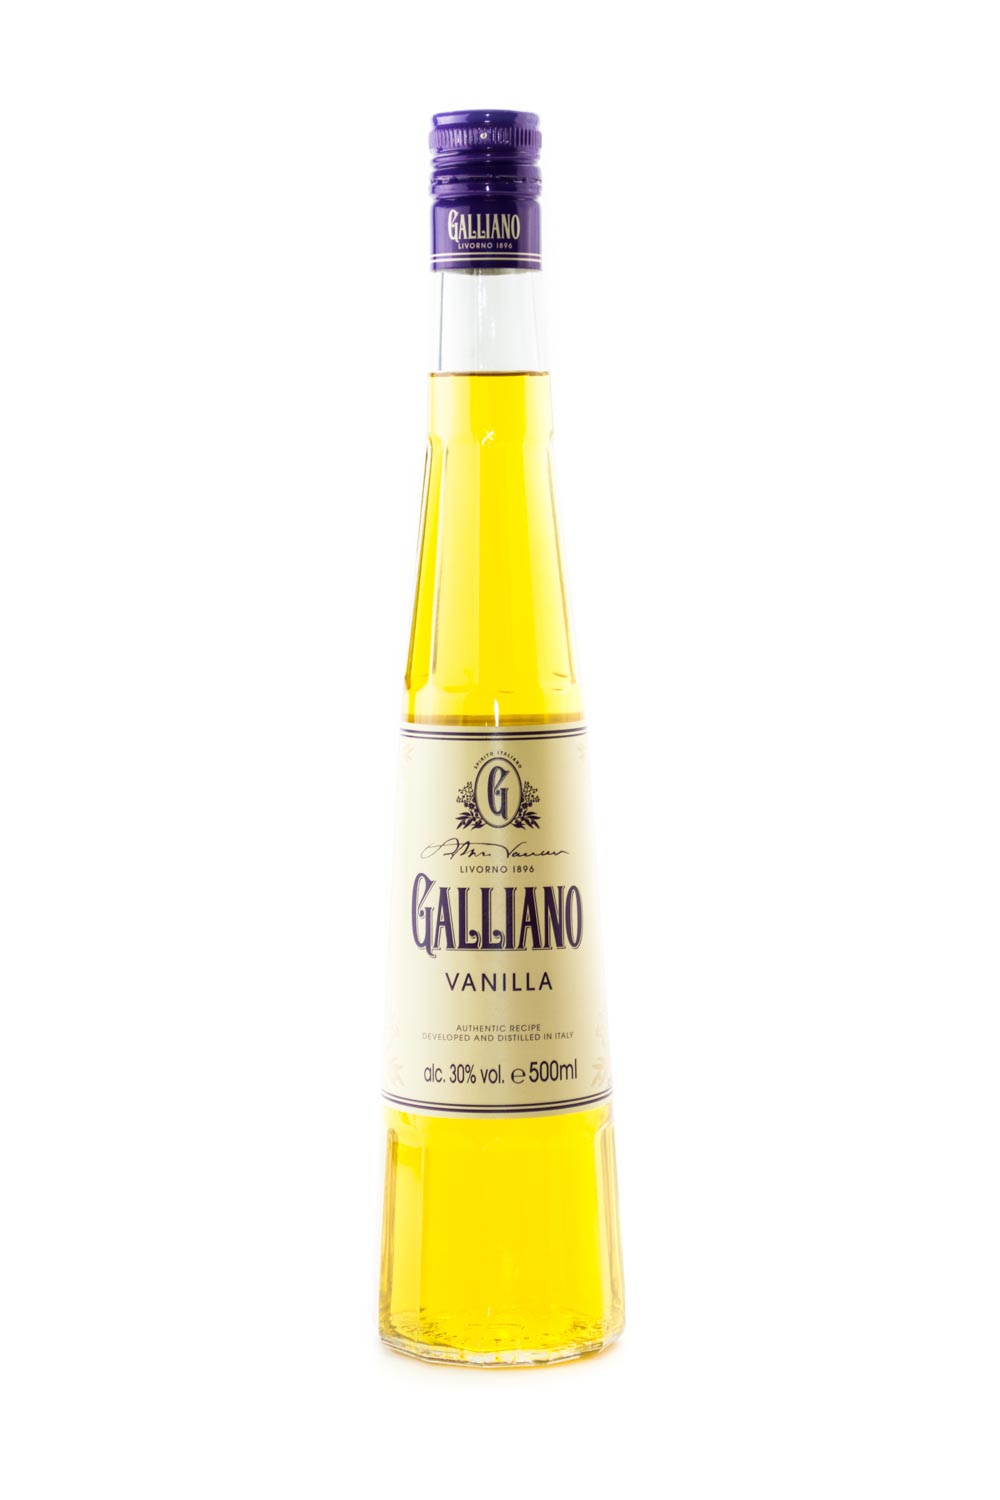 Galliano Vanilla Likör - 0,5L 30% vol